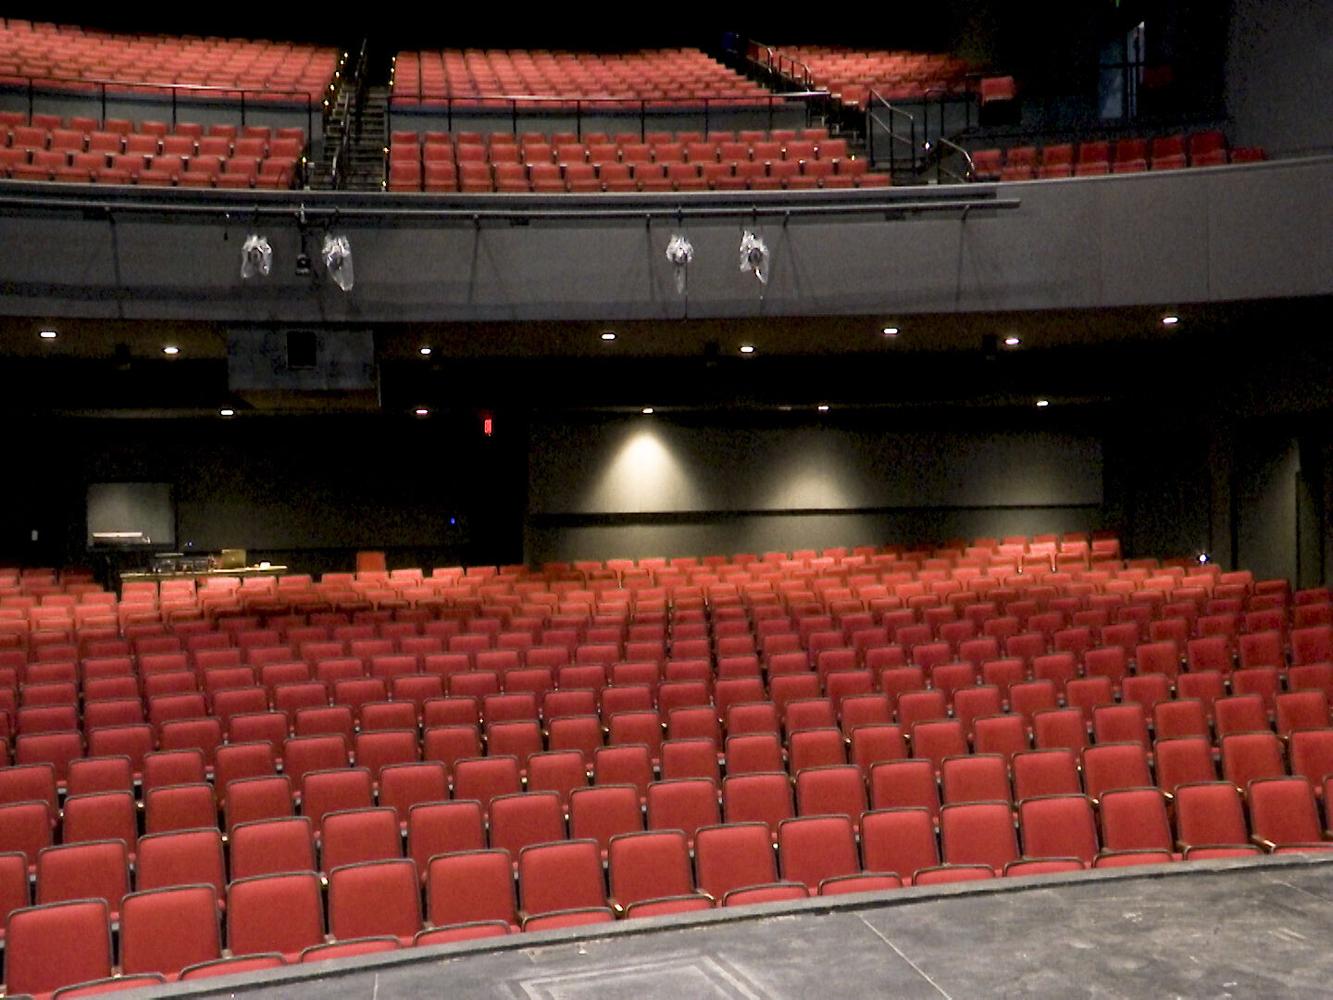 Alberta Bair Theater announces 2021-22 season, July open house event